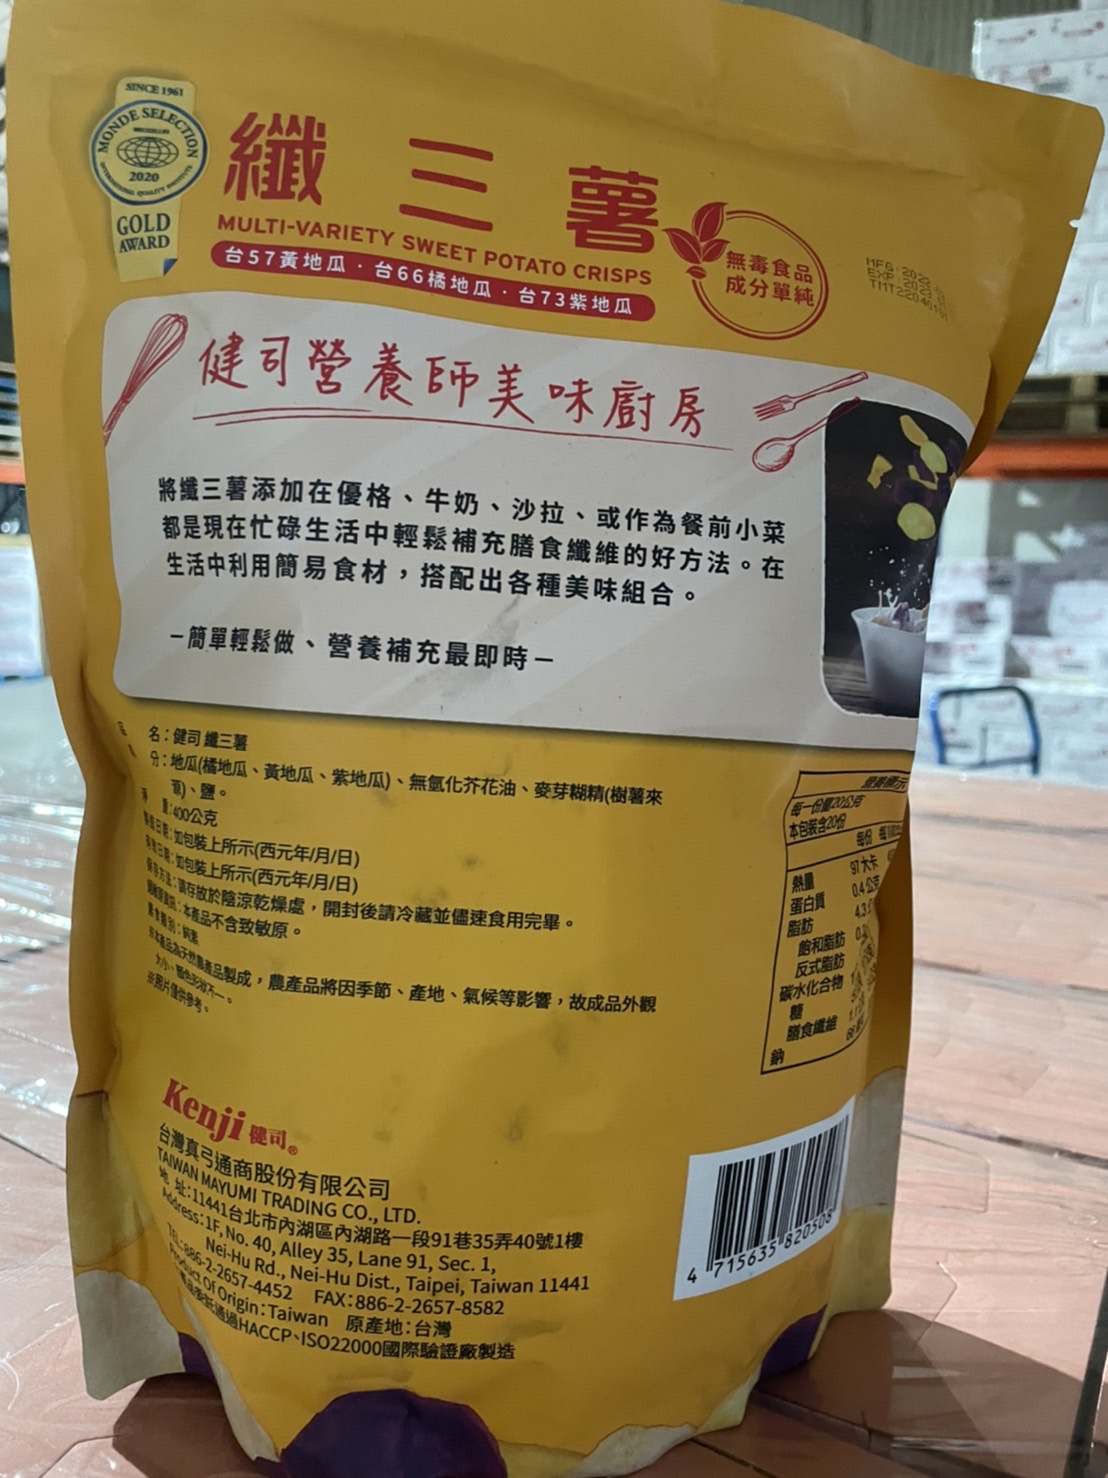 【Kenji 健司】纖三薯400g 綜合口味地瓜酥 原始地瓜風味 無添加人工香料